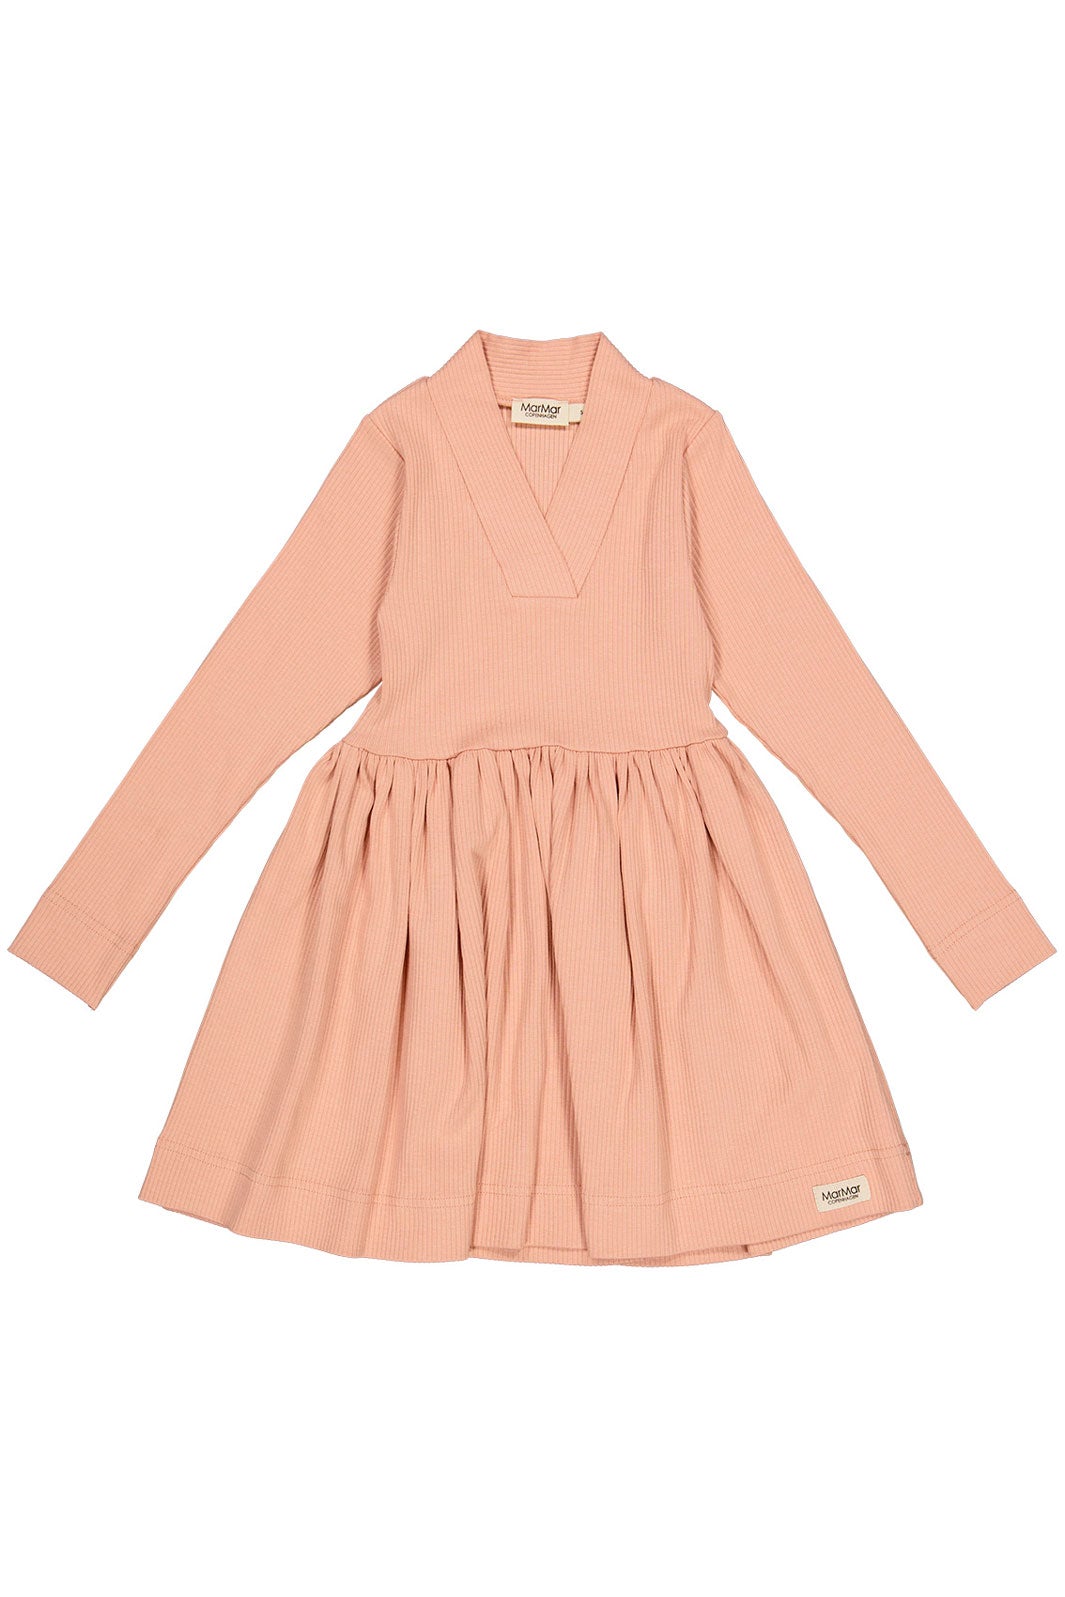 MarMar - Dress 221-100-29 - Apricot Creme Kjoler 